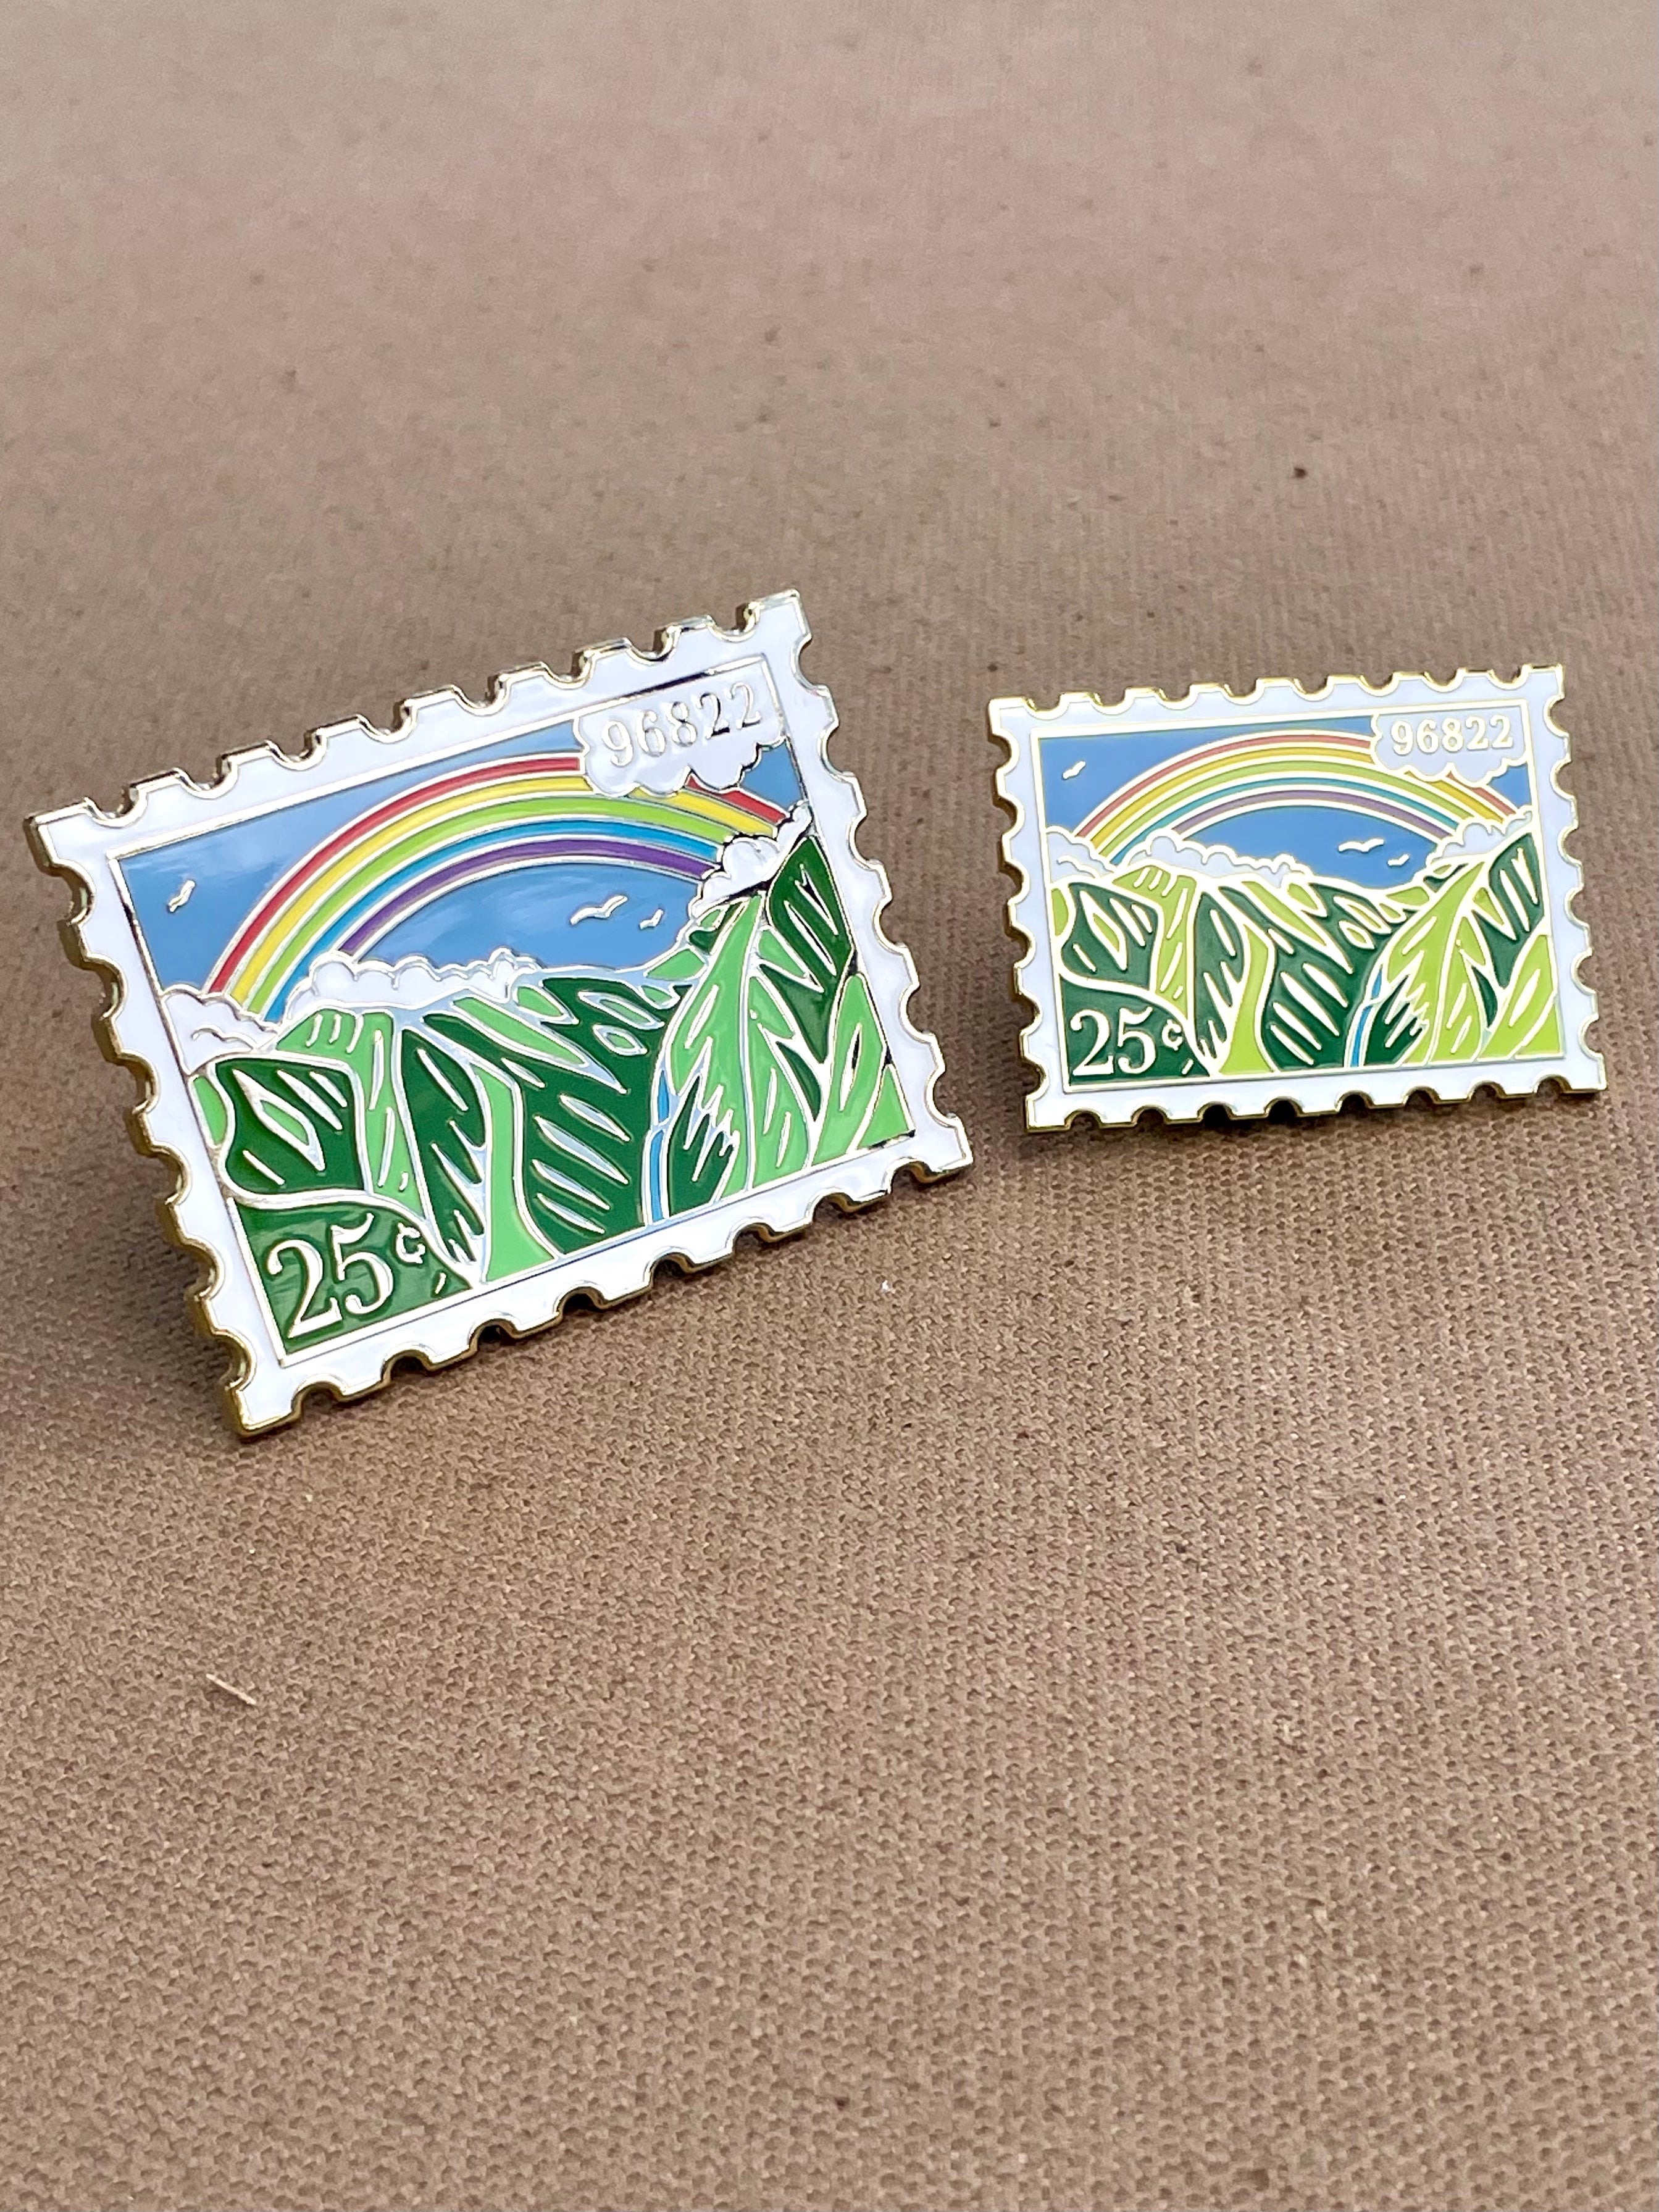 Mānoa Valley Post Stamp Pin